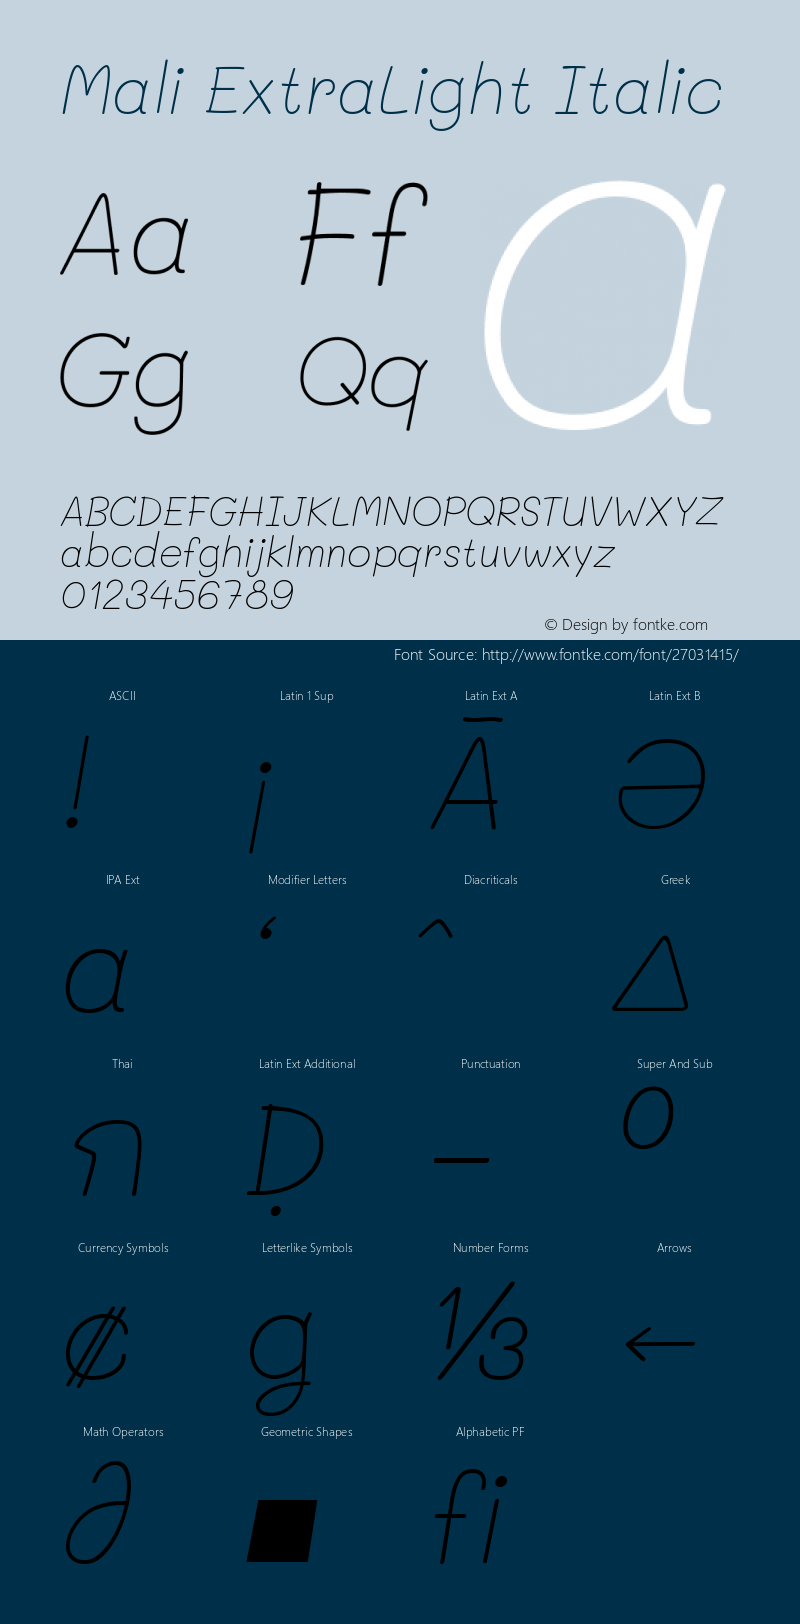 Mali ExtraLight Italic Version 1.000; ttfautohint (v1.6) Font Sample